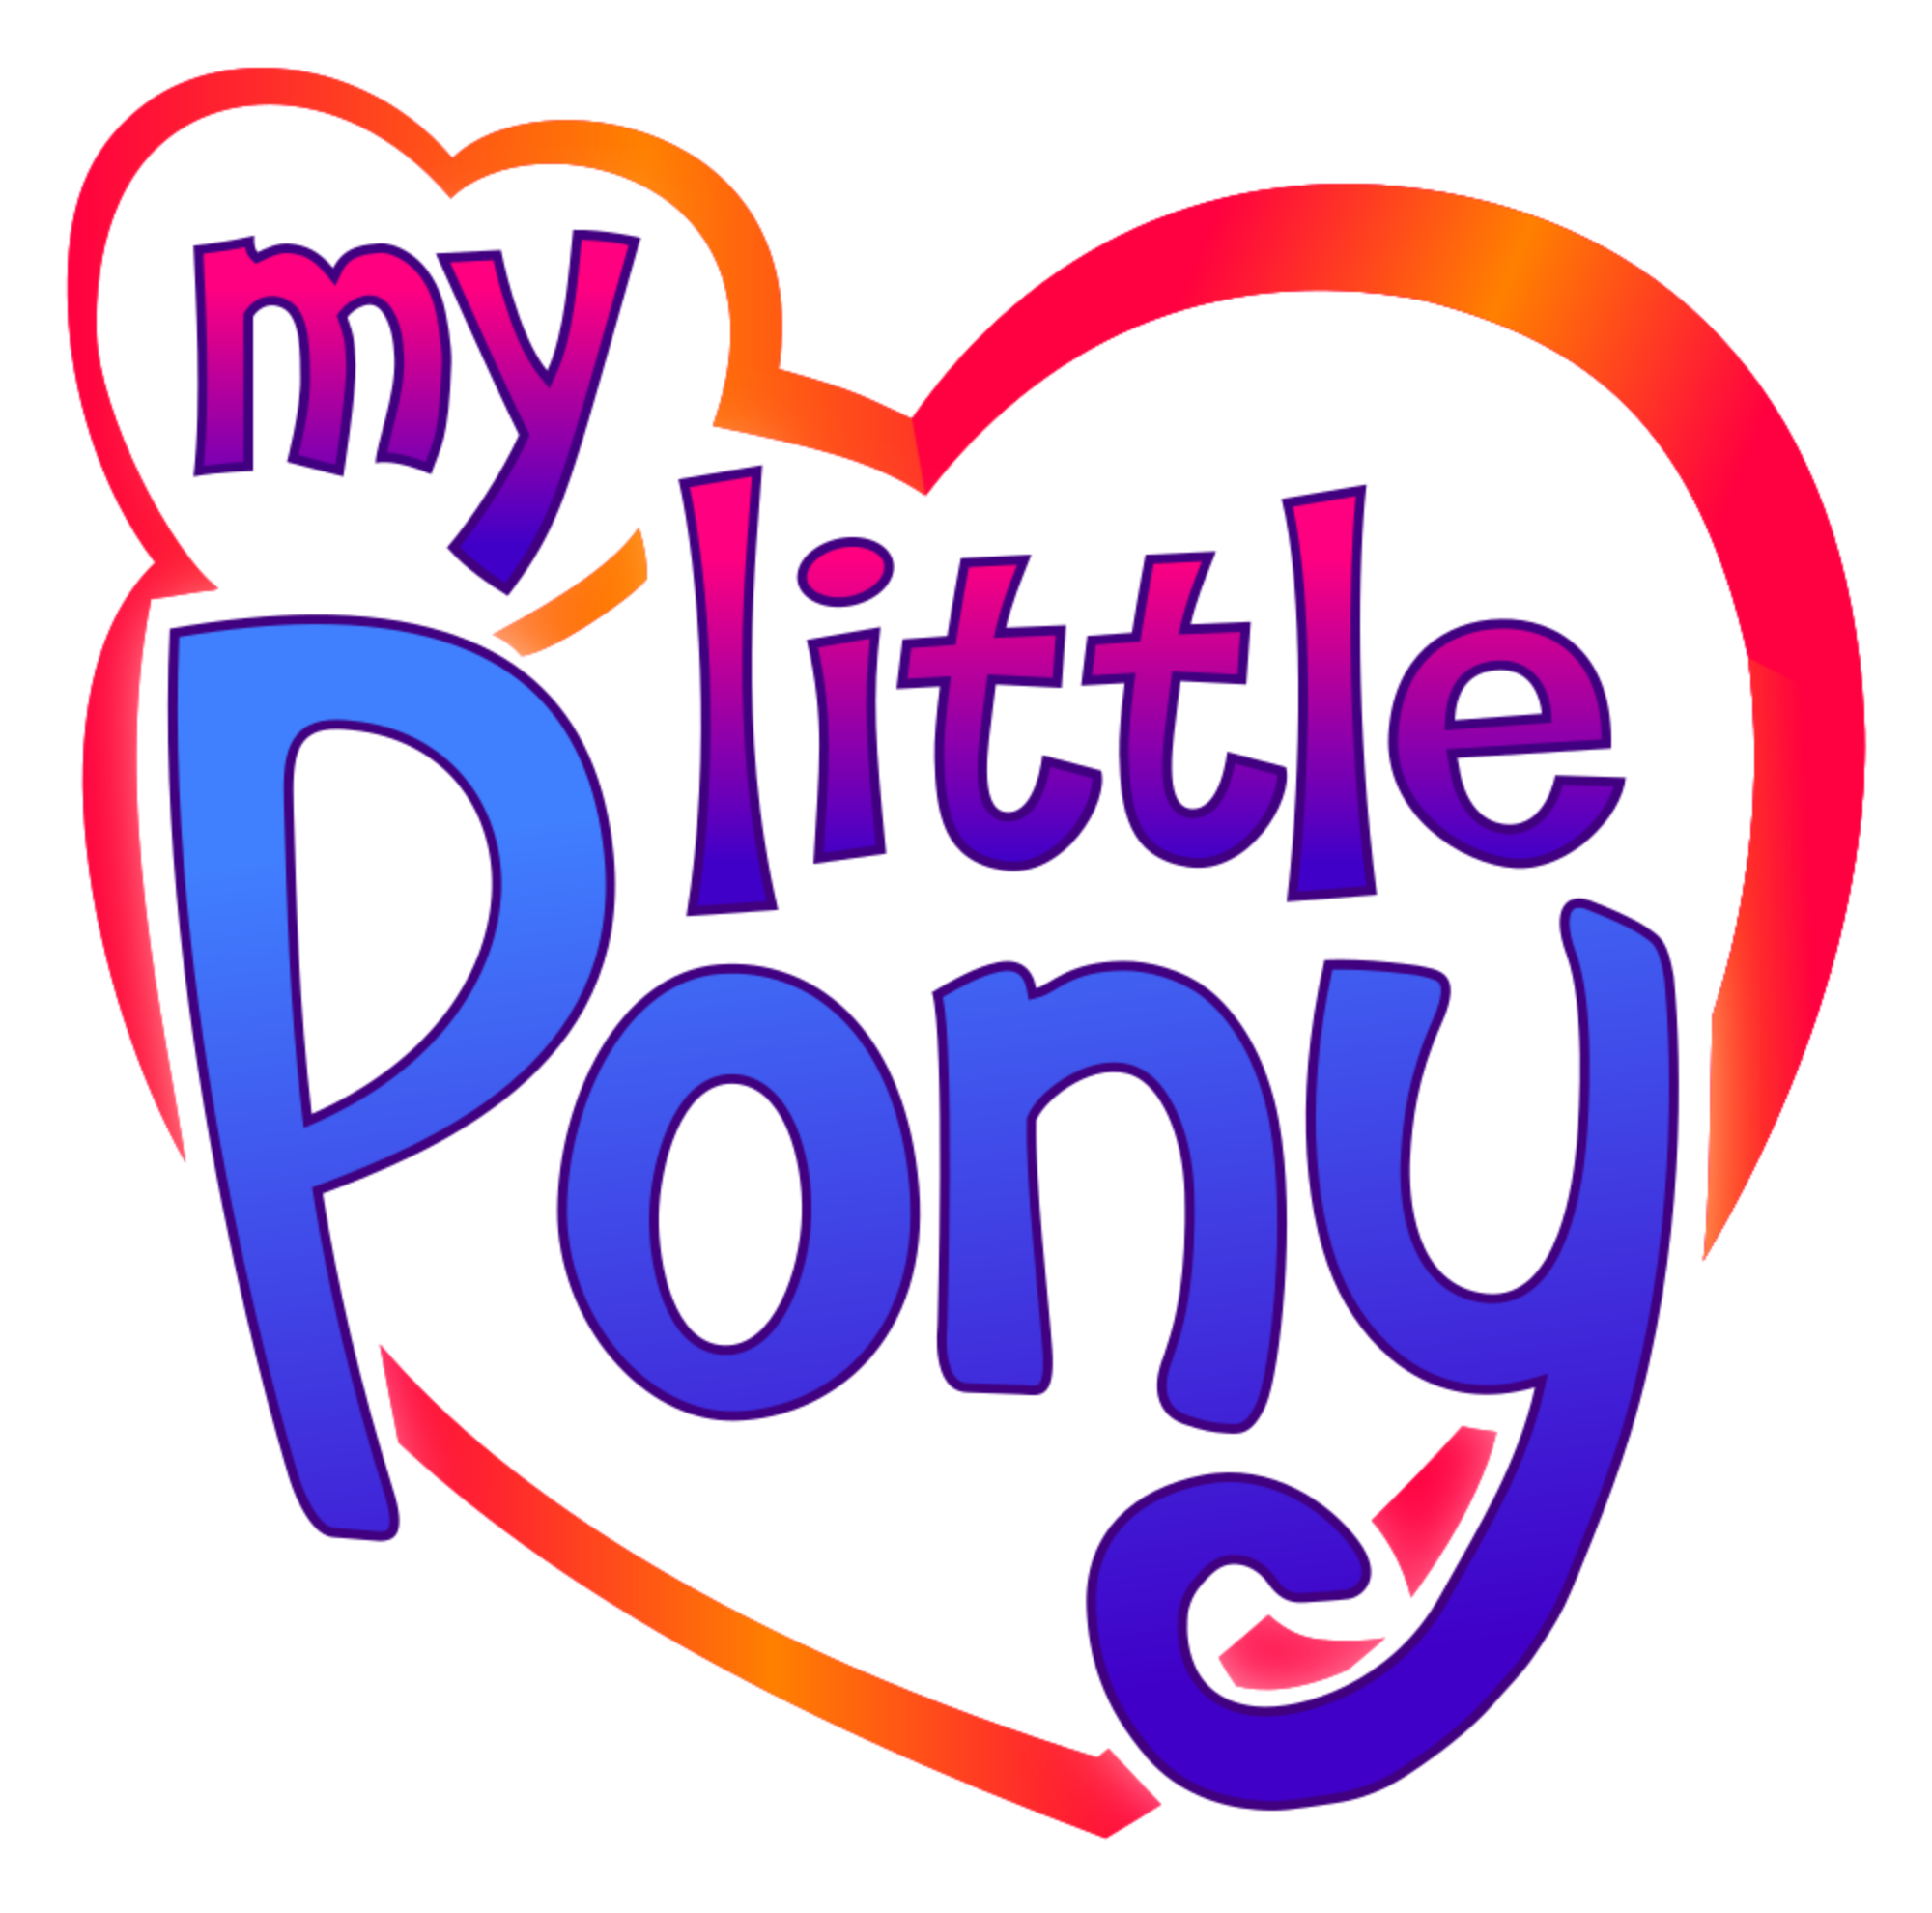 My Little Pony Meet the Ponies (1 DVD Box Set)